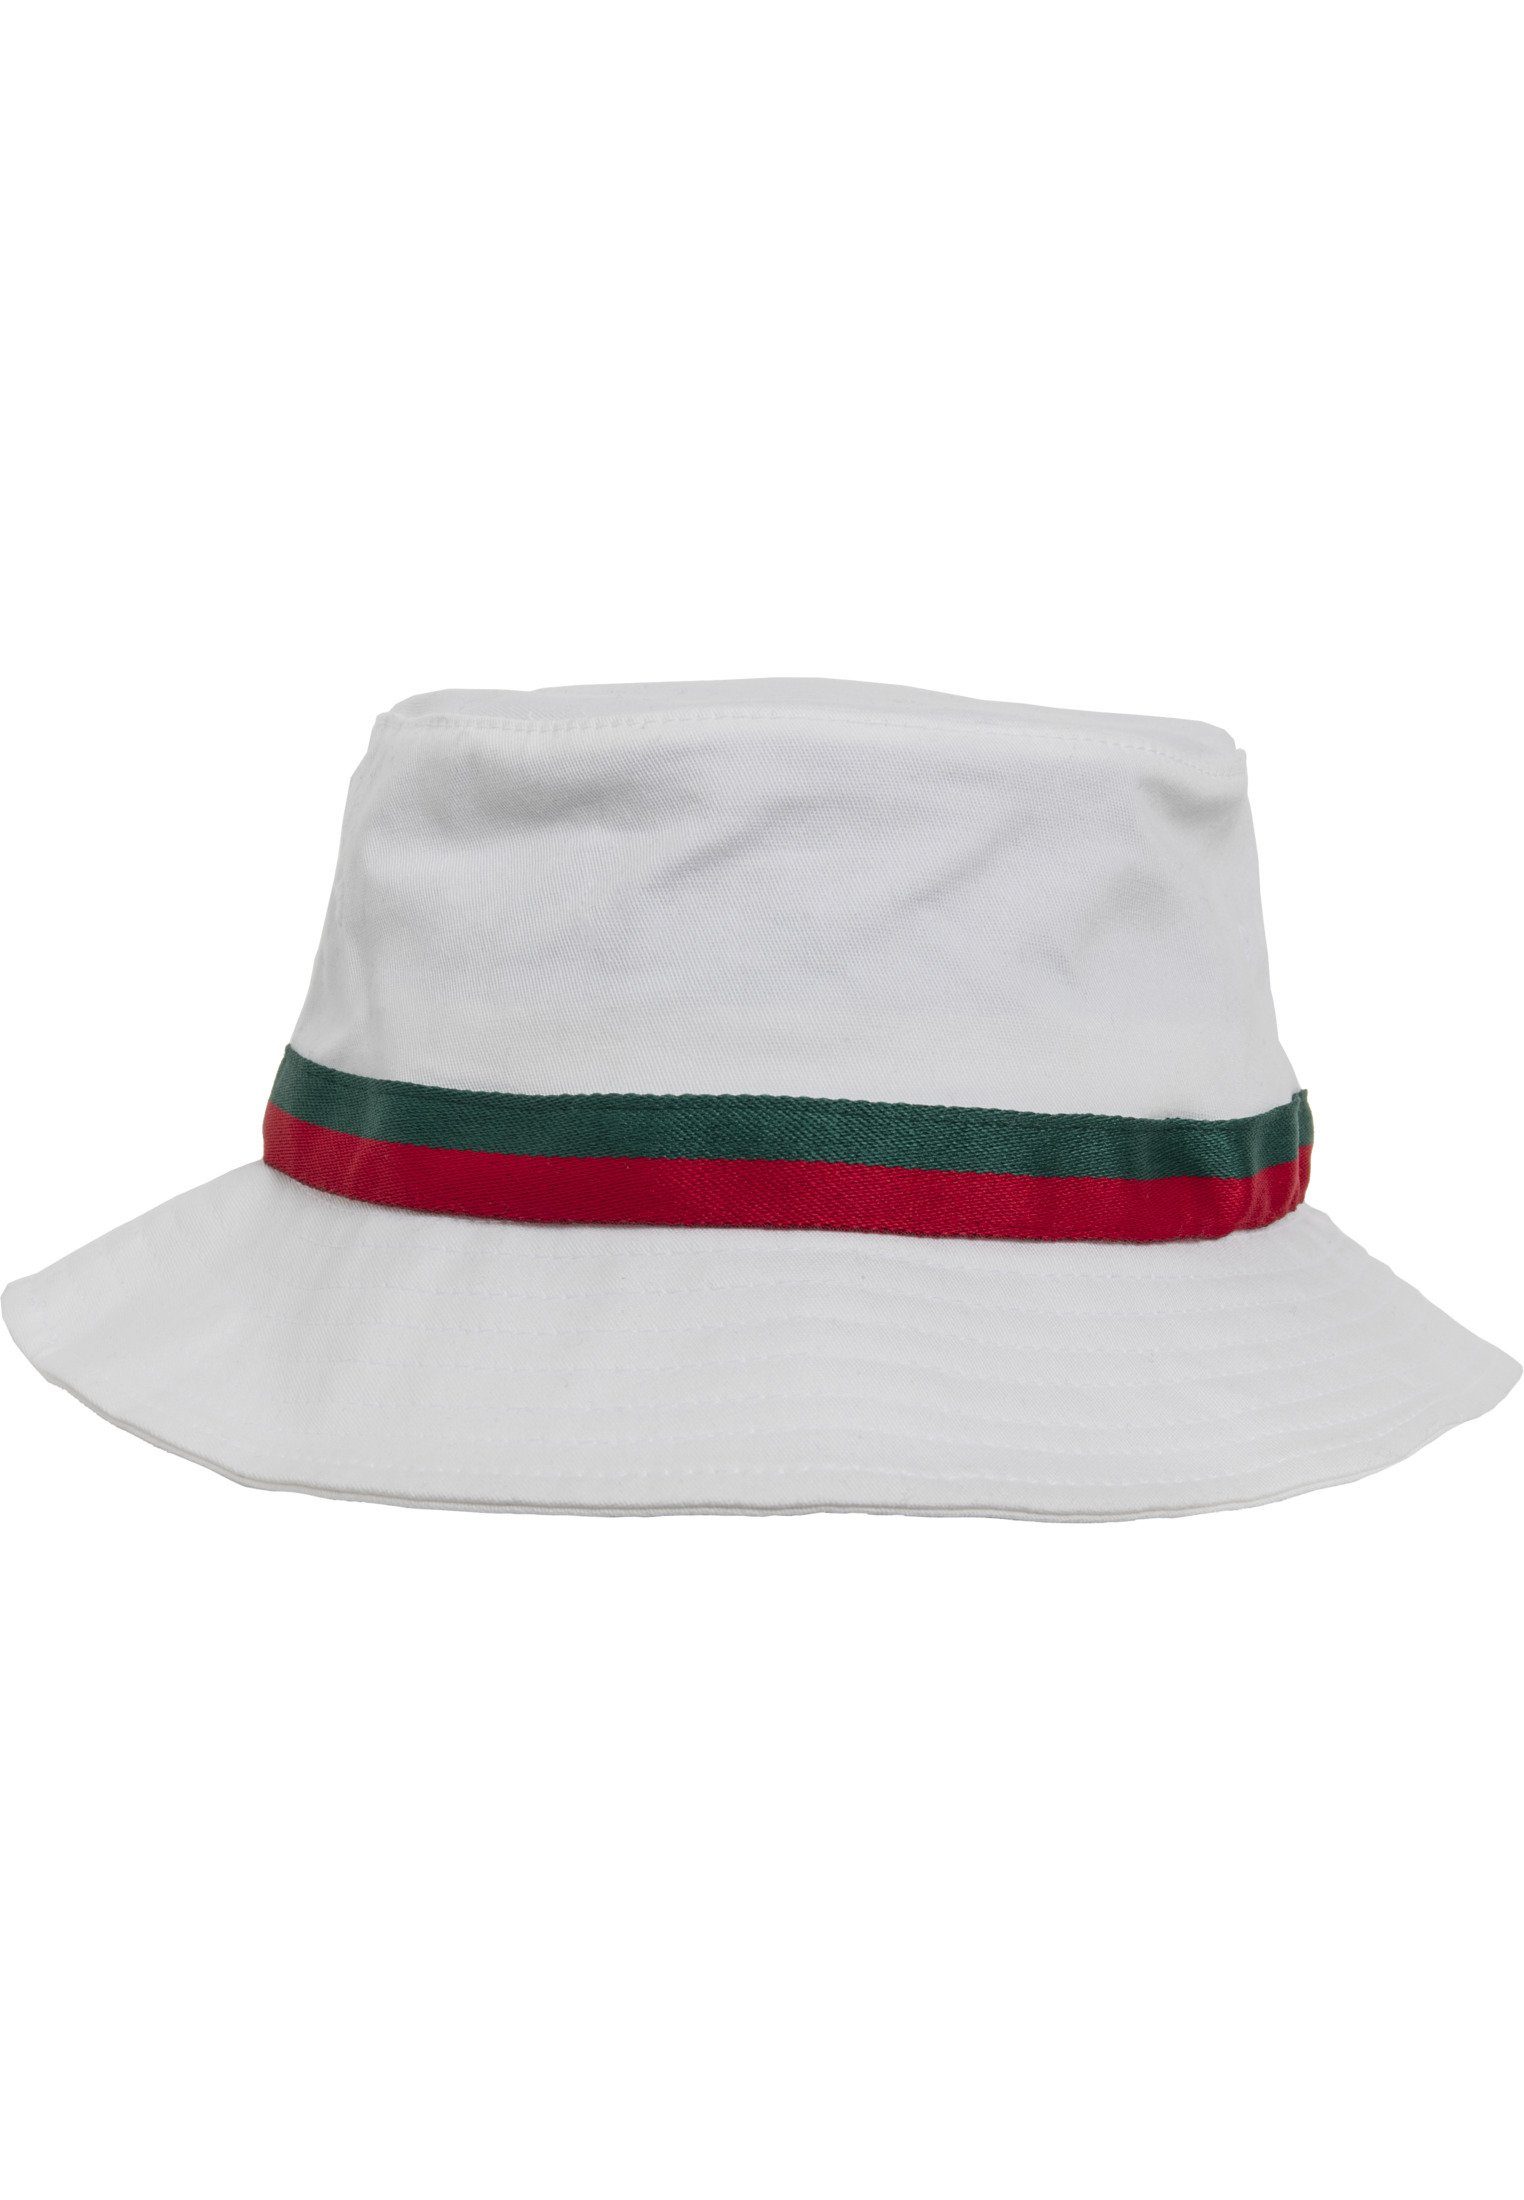 Bucket Stripe Hat Hat Bucket Cap Flexfit white/firered/green Flex